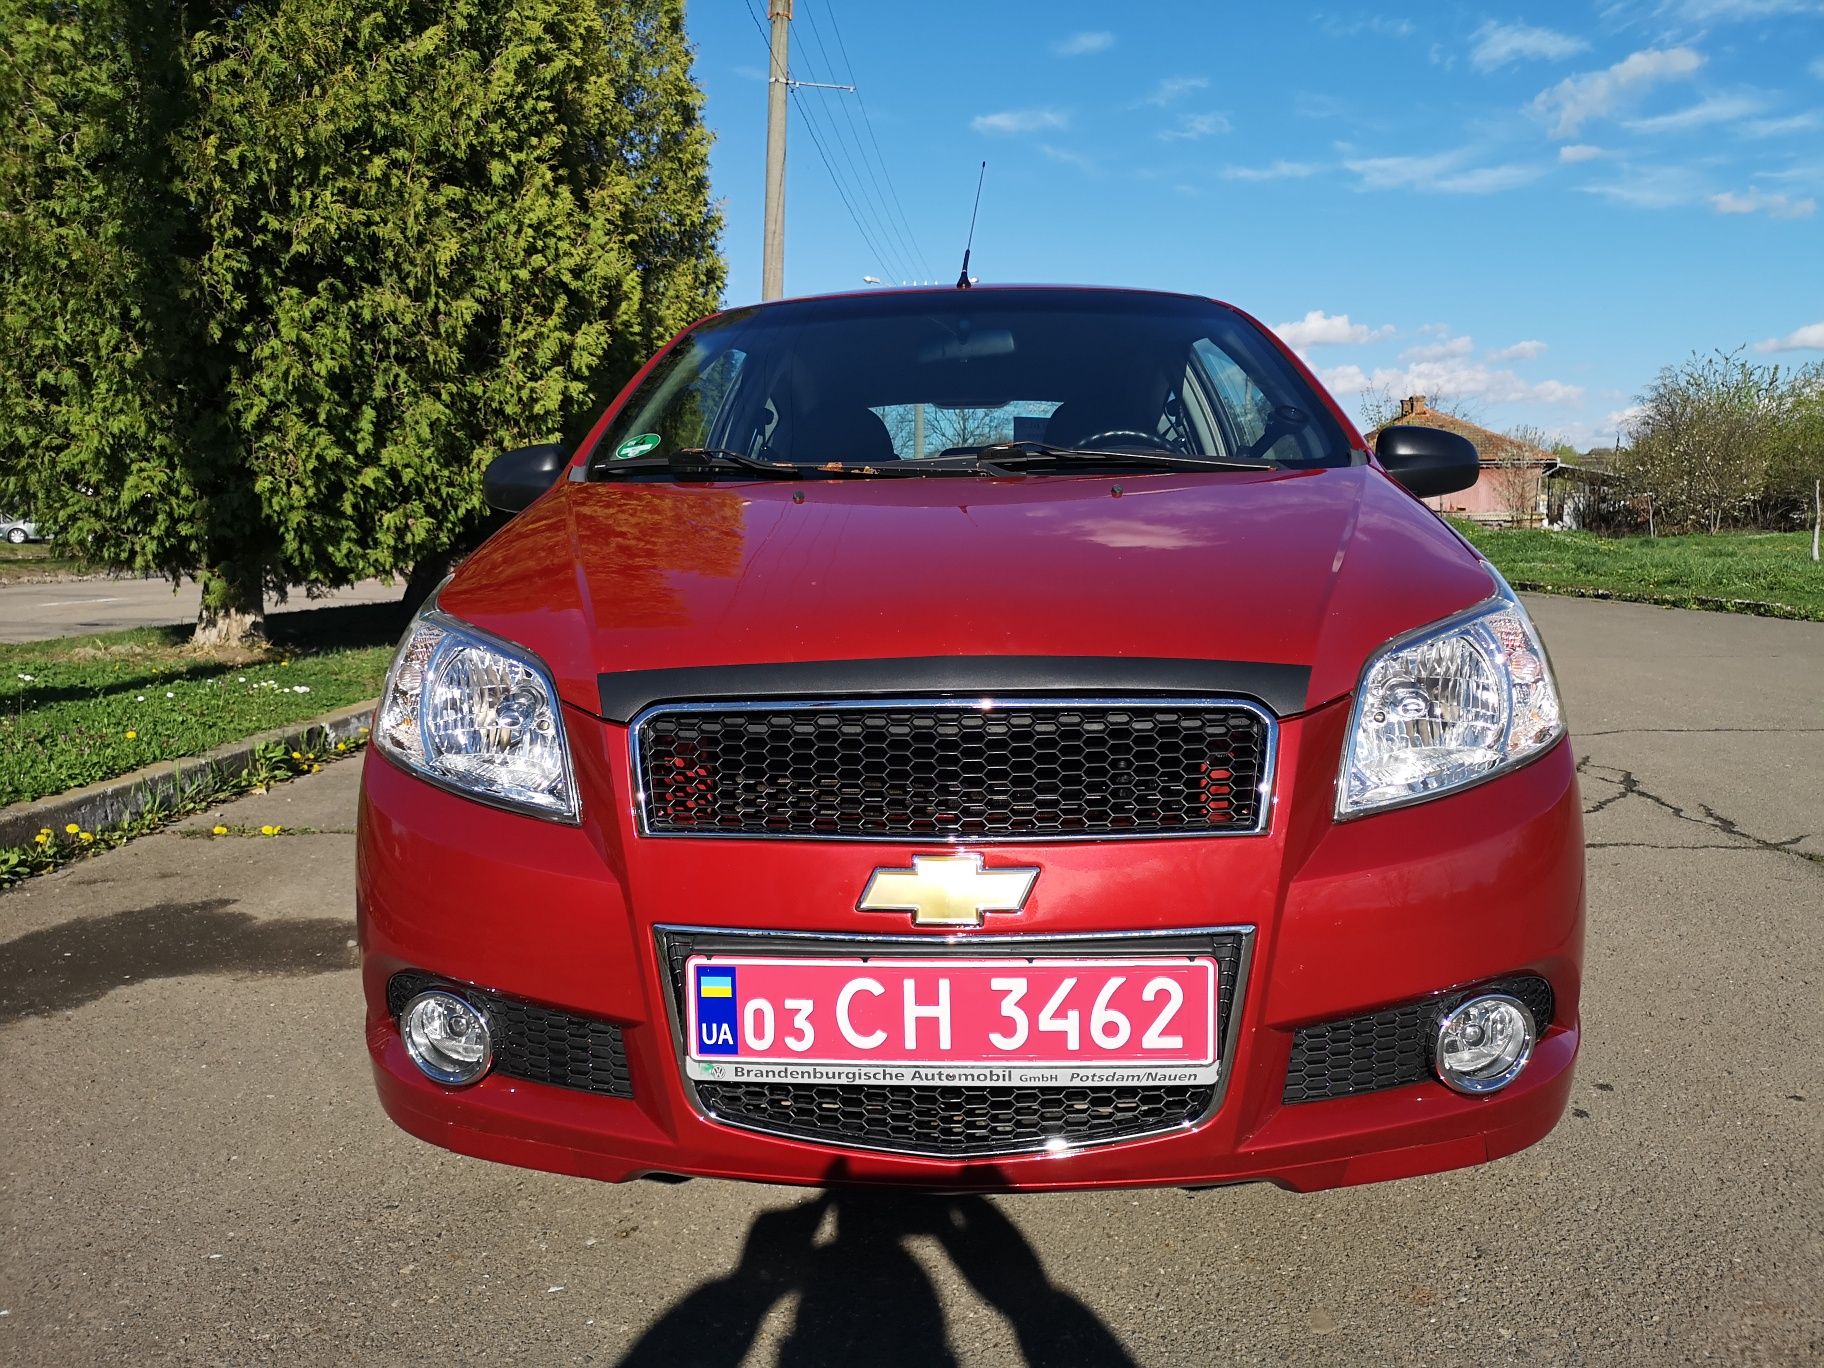 Chevrolet Aveo 1.2 16V  2009 р. 145000км. пригнана з німеччини (Kорея)